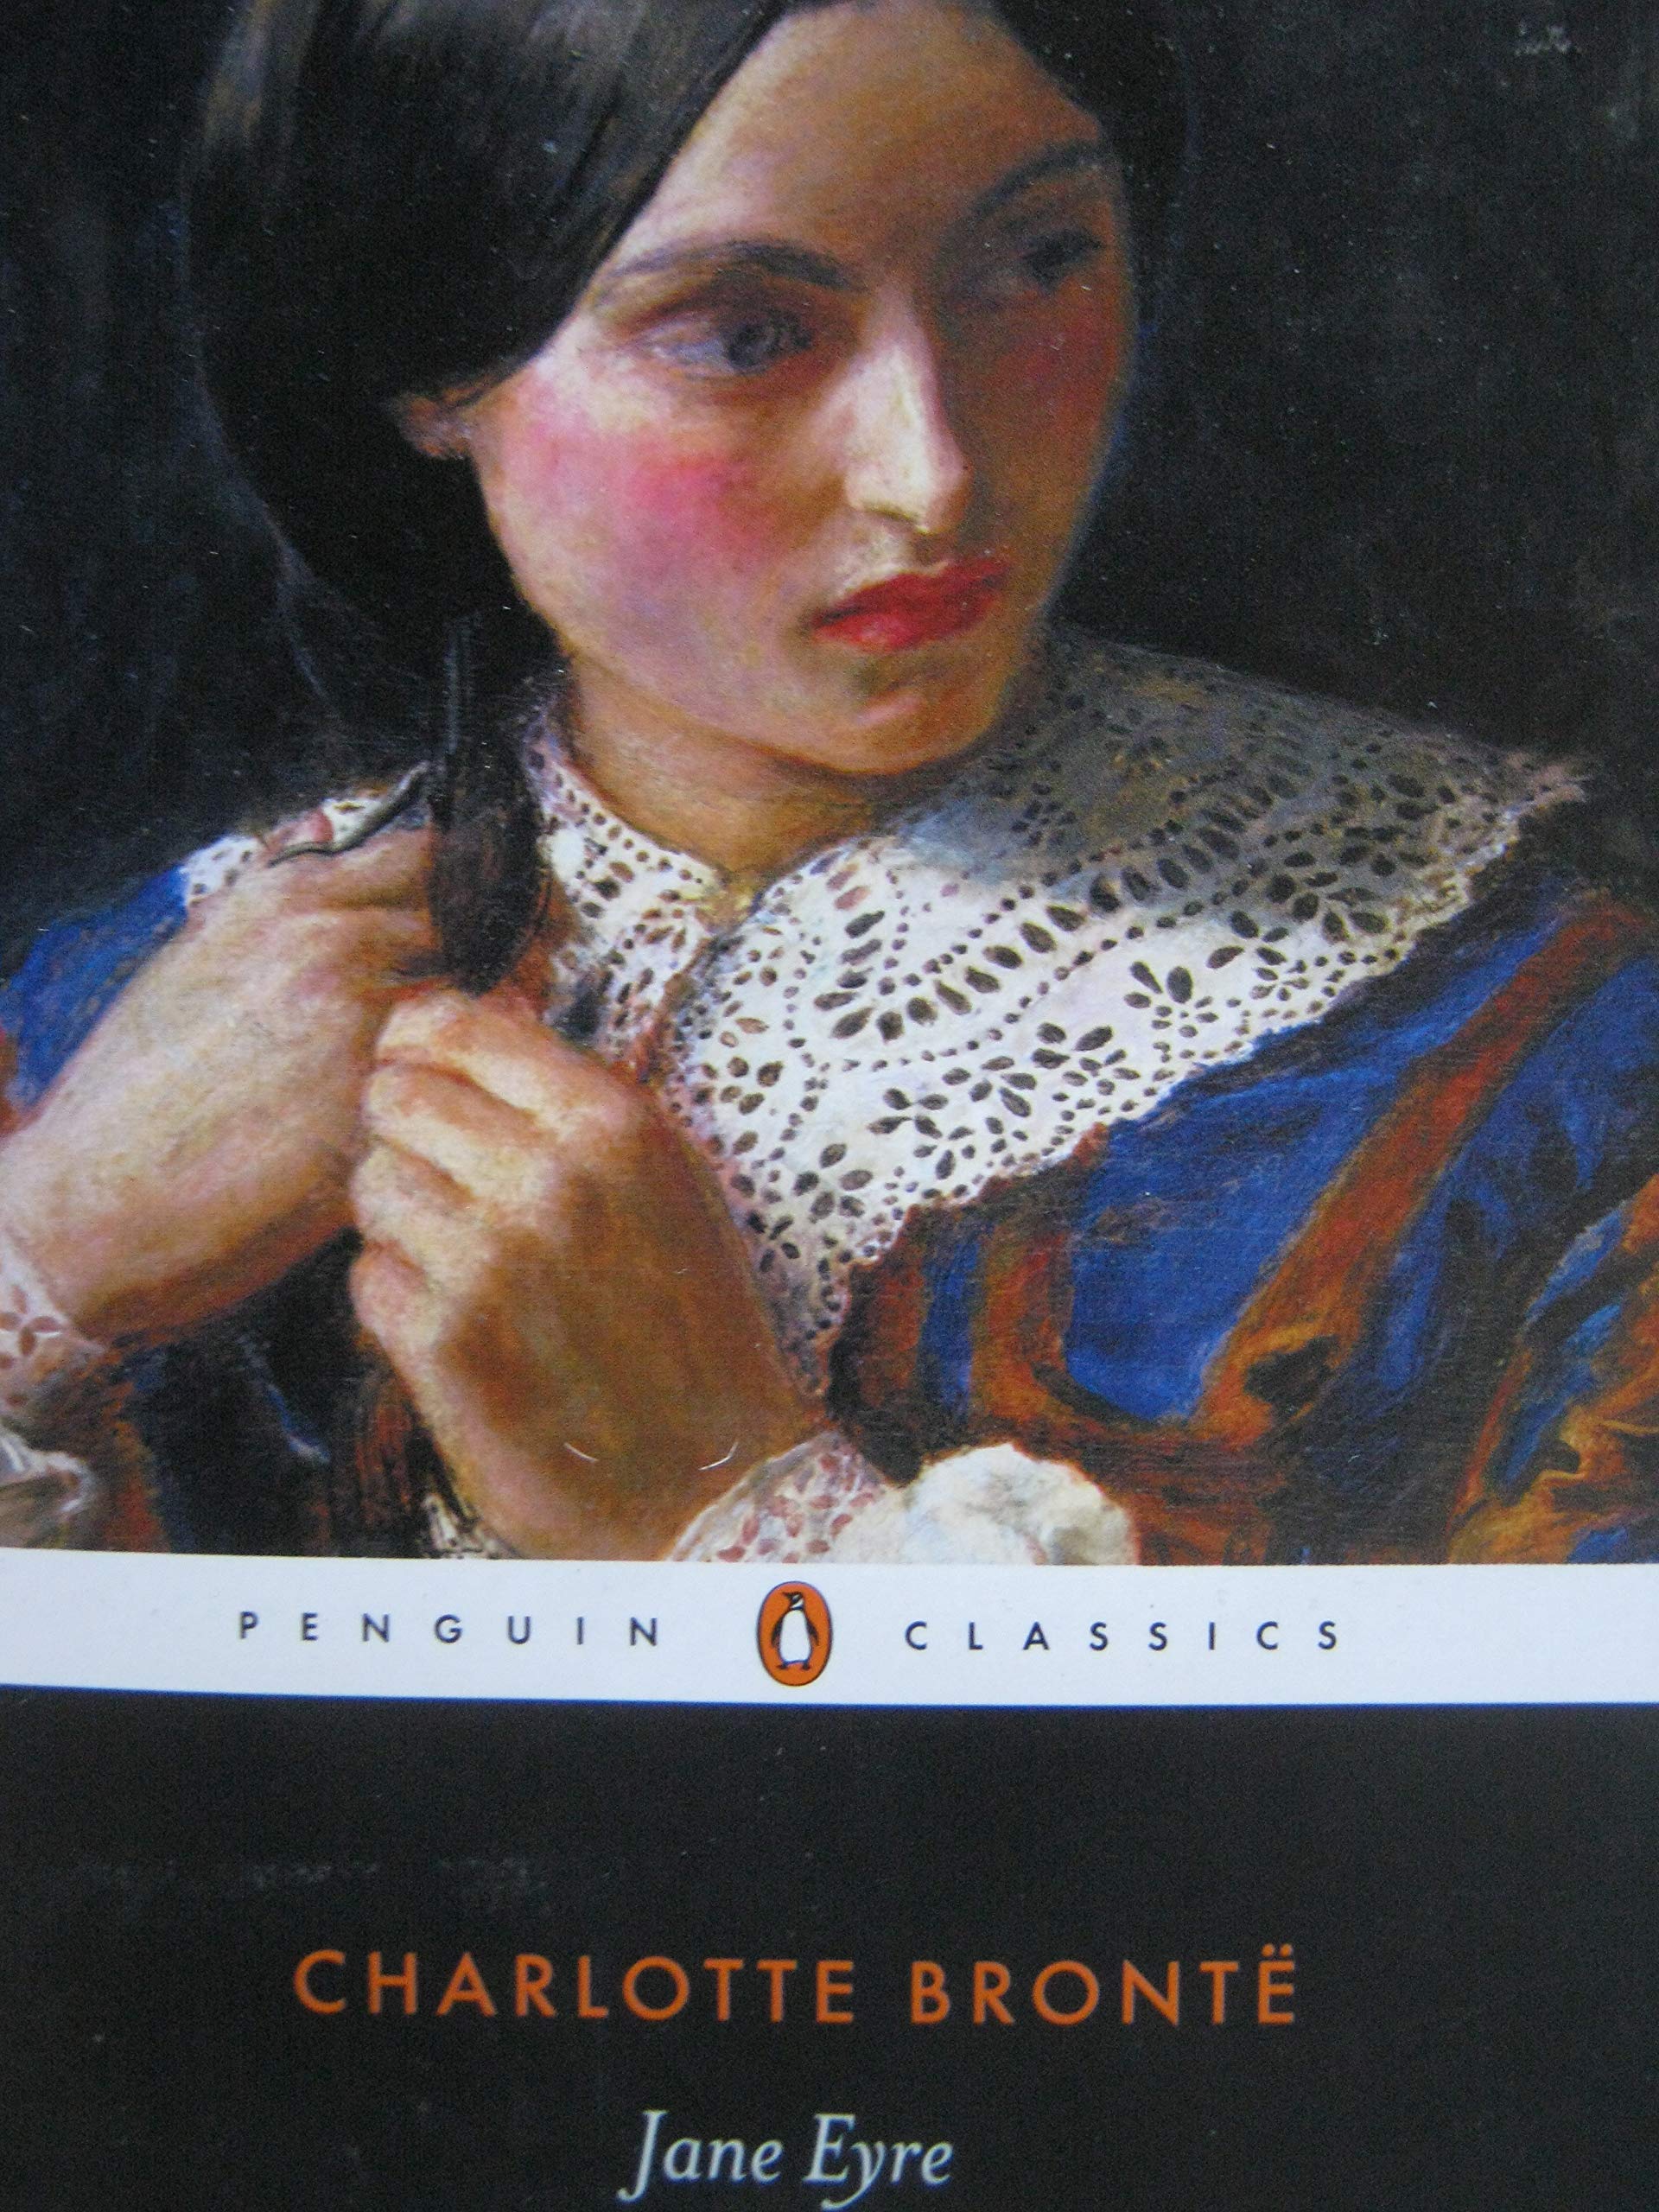 Jane Eyre (Penguin Classics) Paperback by Charlotte Bronte & Stevie Davies (Author)